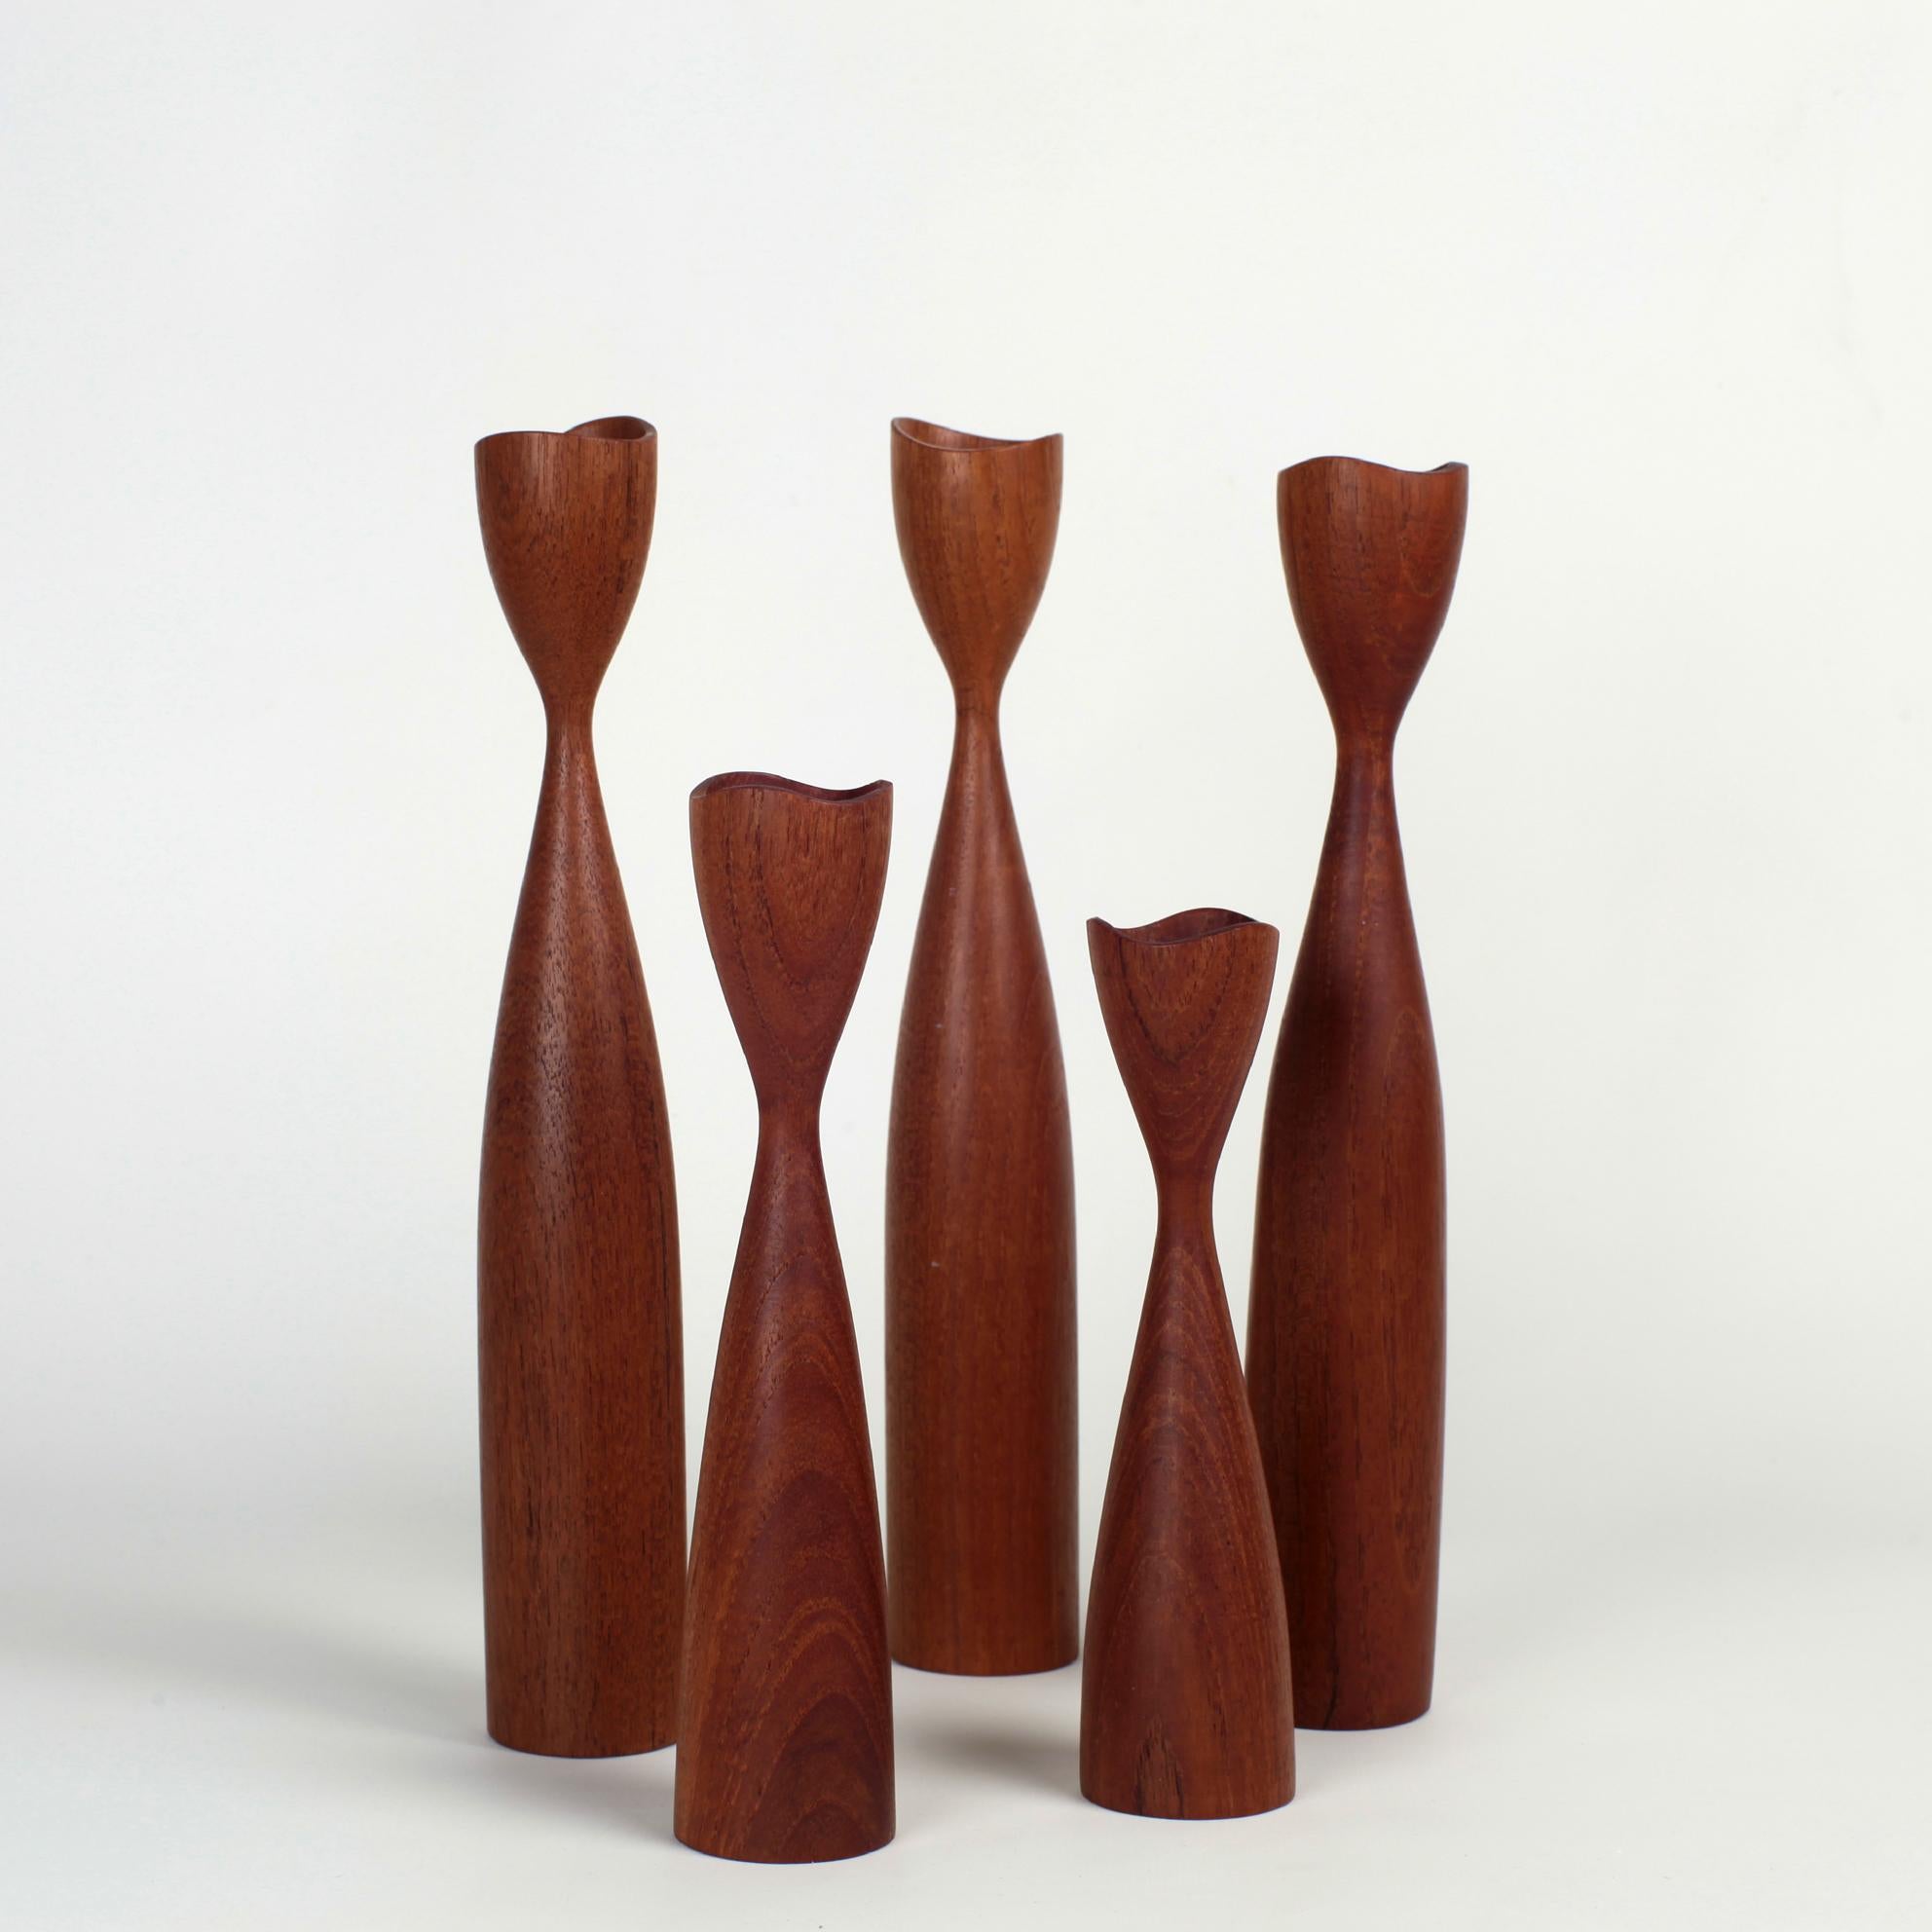 Very nice set of 5 candlesticks, modernist design from Denmark.

Measures: Heights 30 -29 - 29 - 22 - 19 cm.